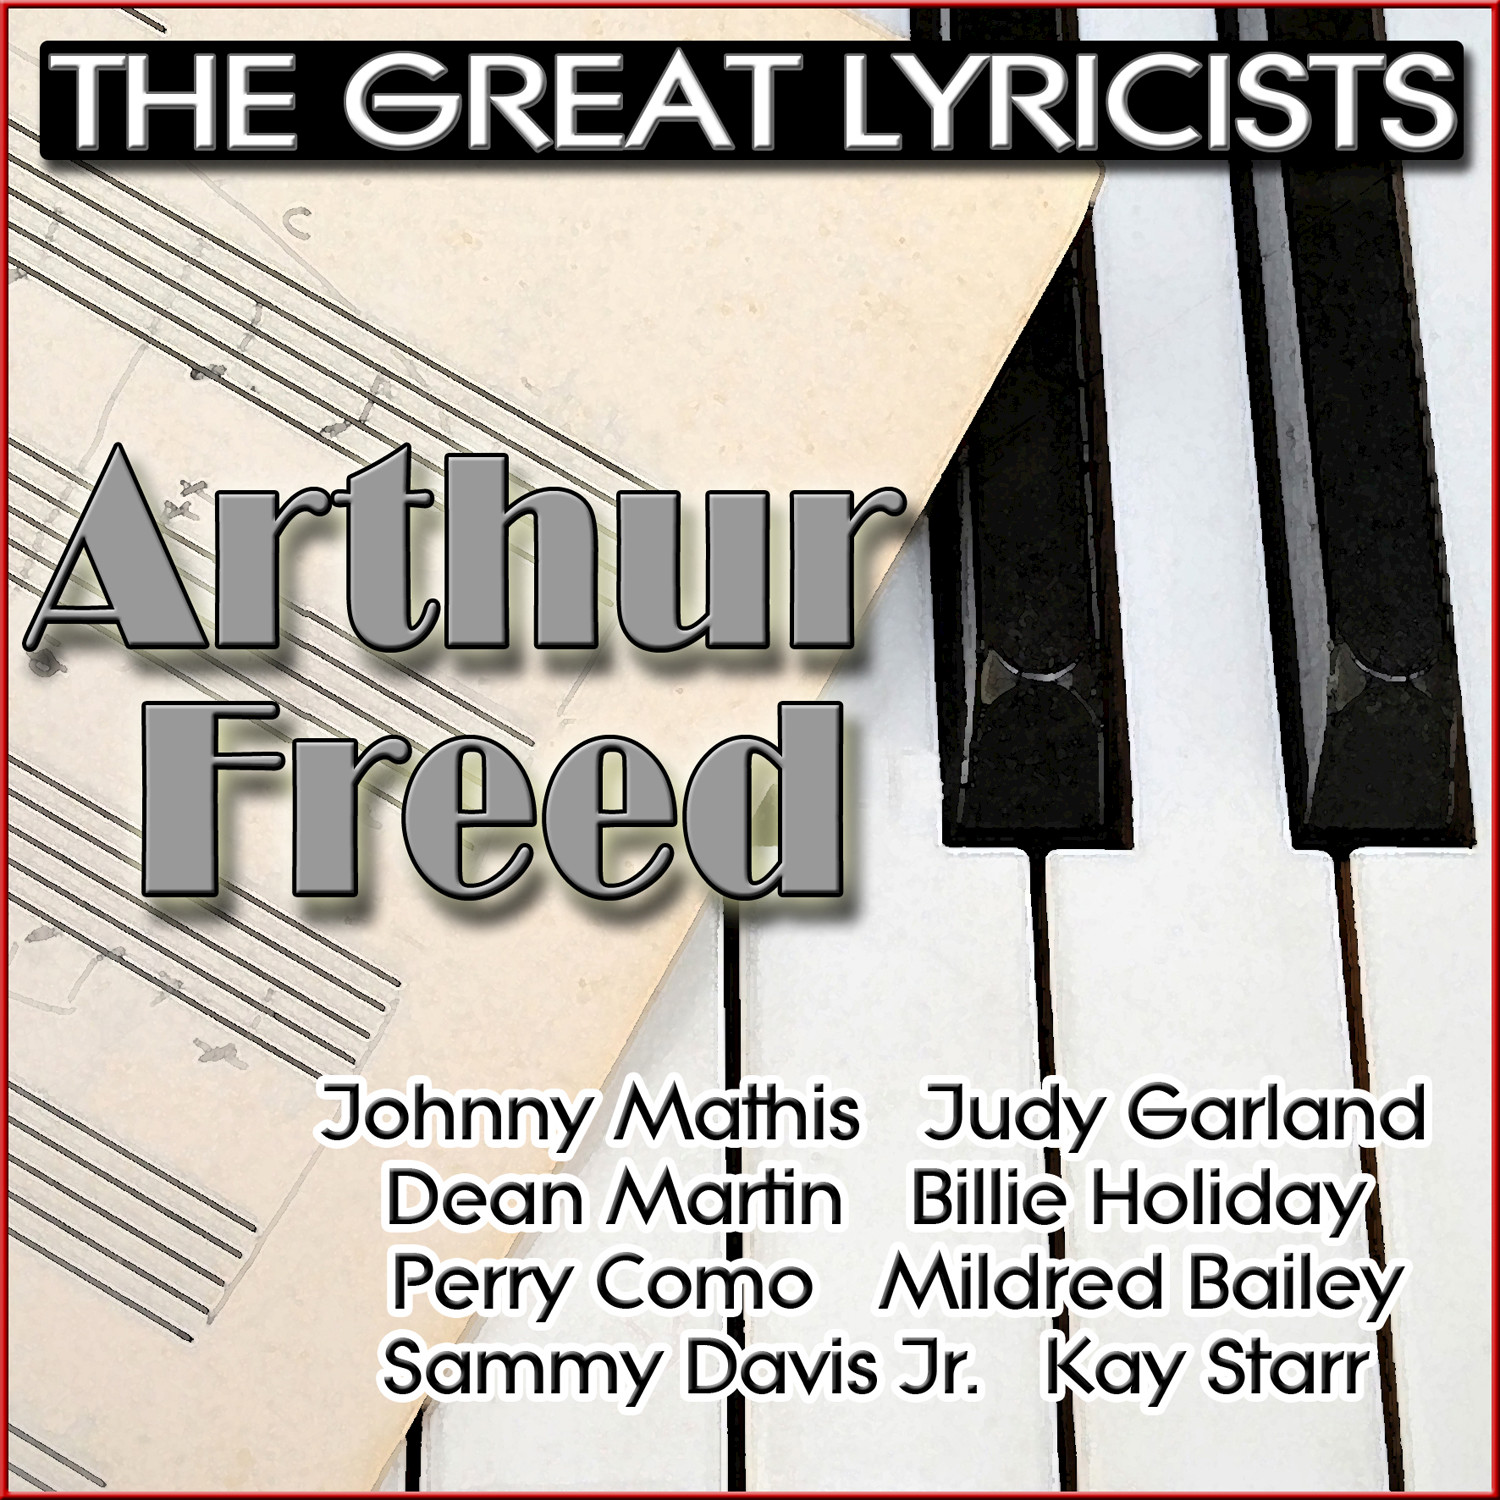 The Great Lyricists - Arthur Freed